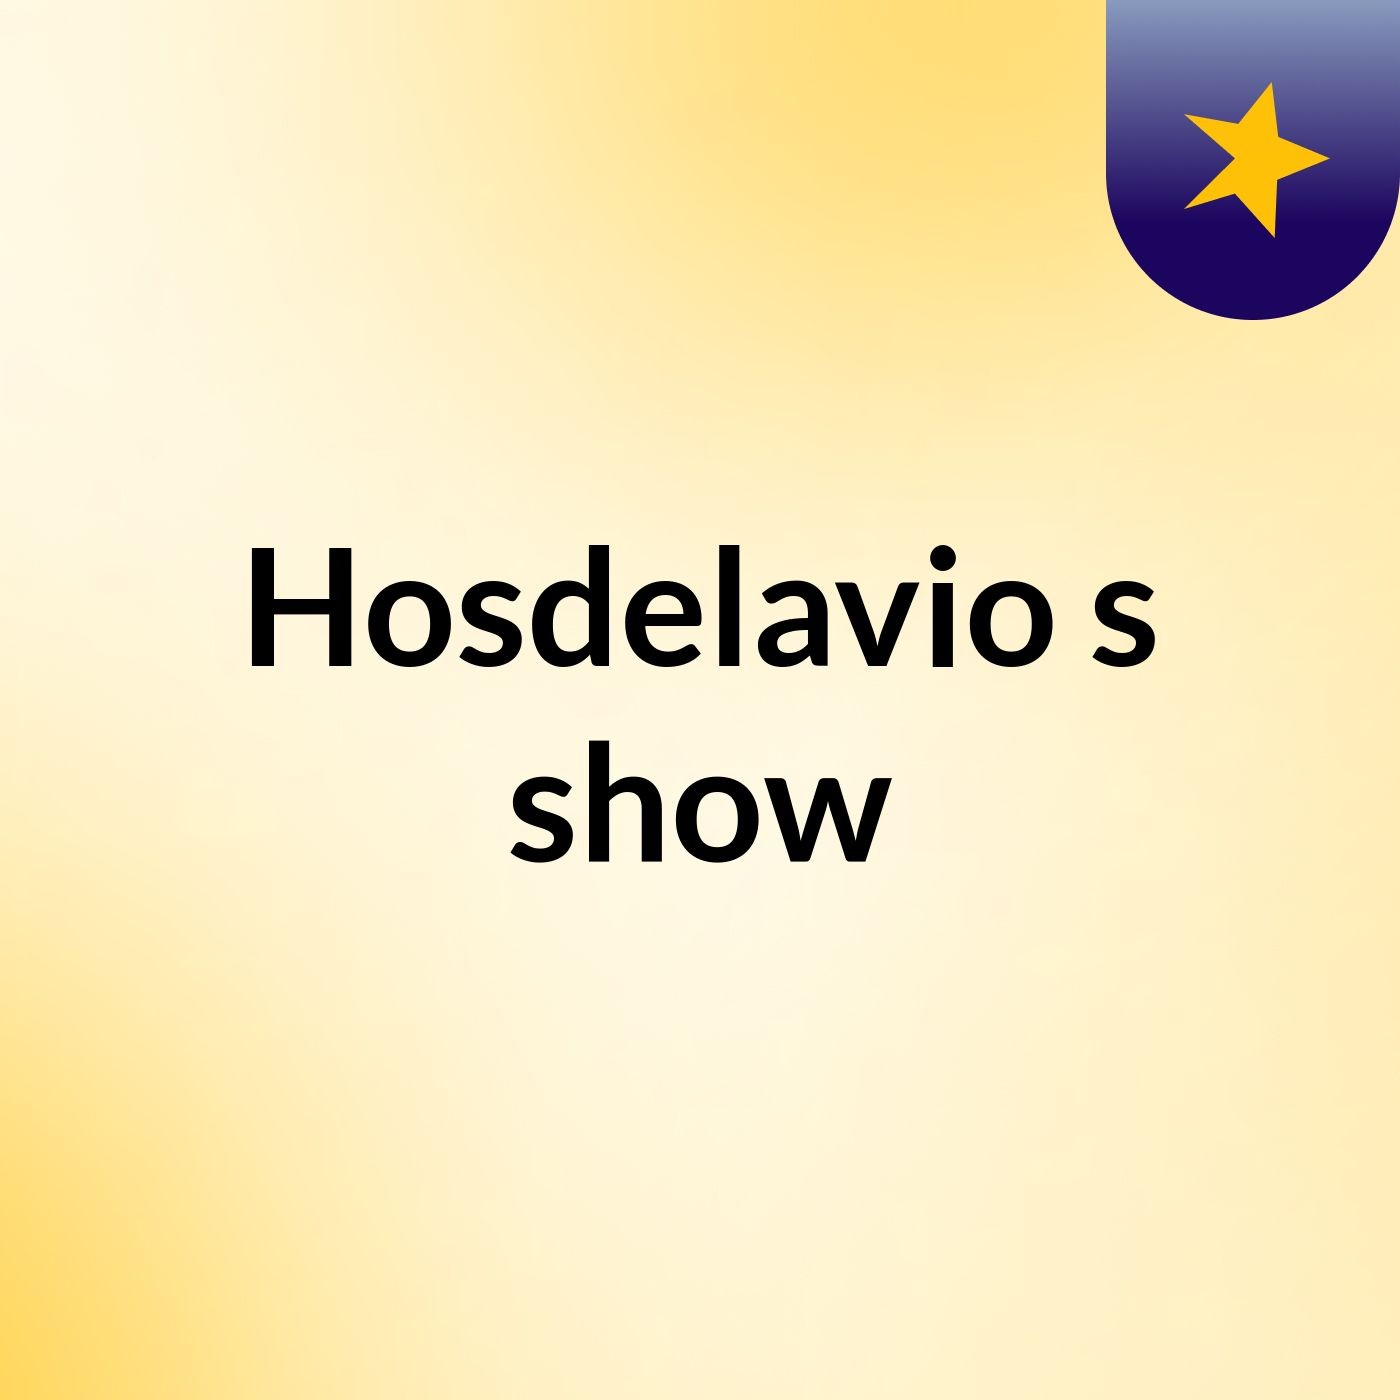 Hosdelavio's show